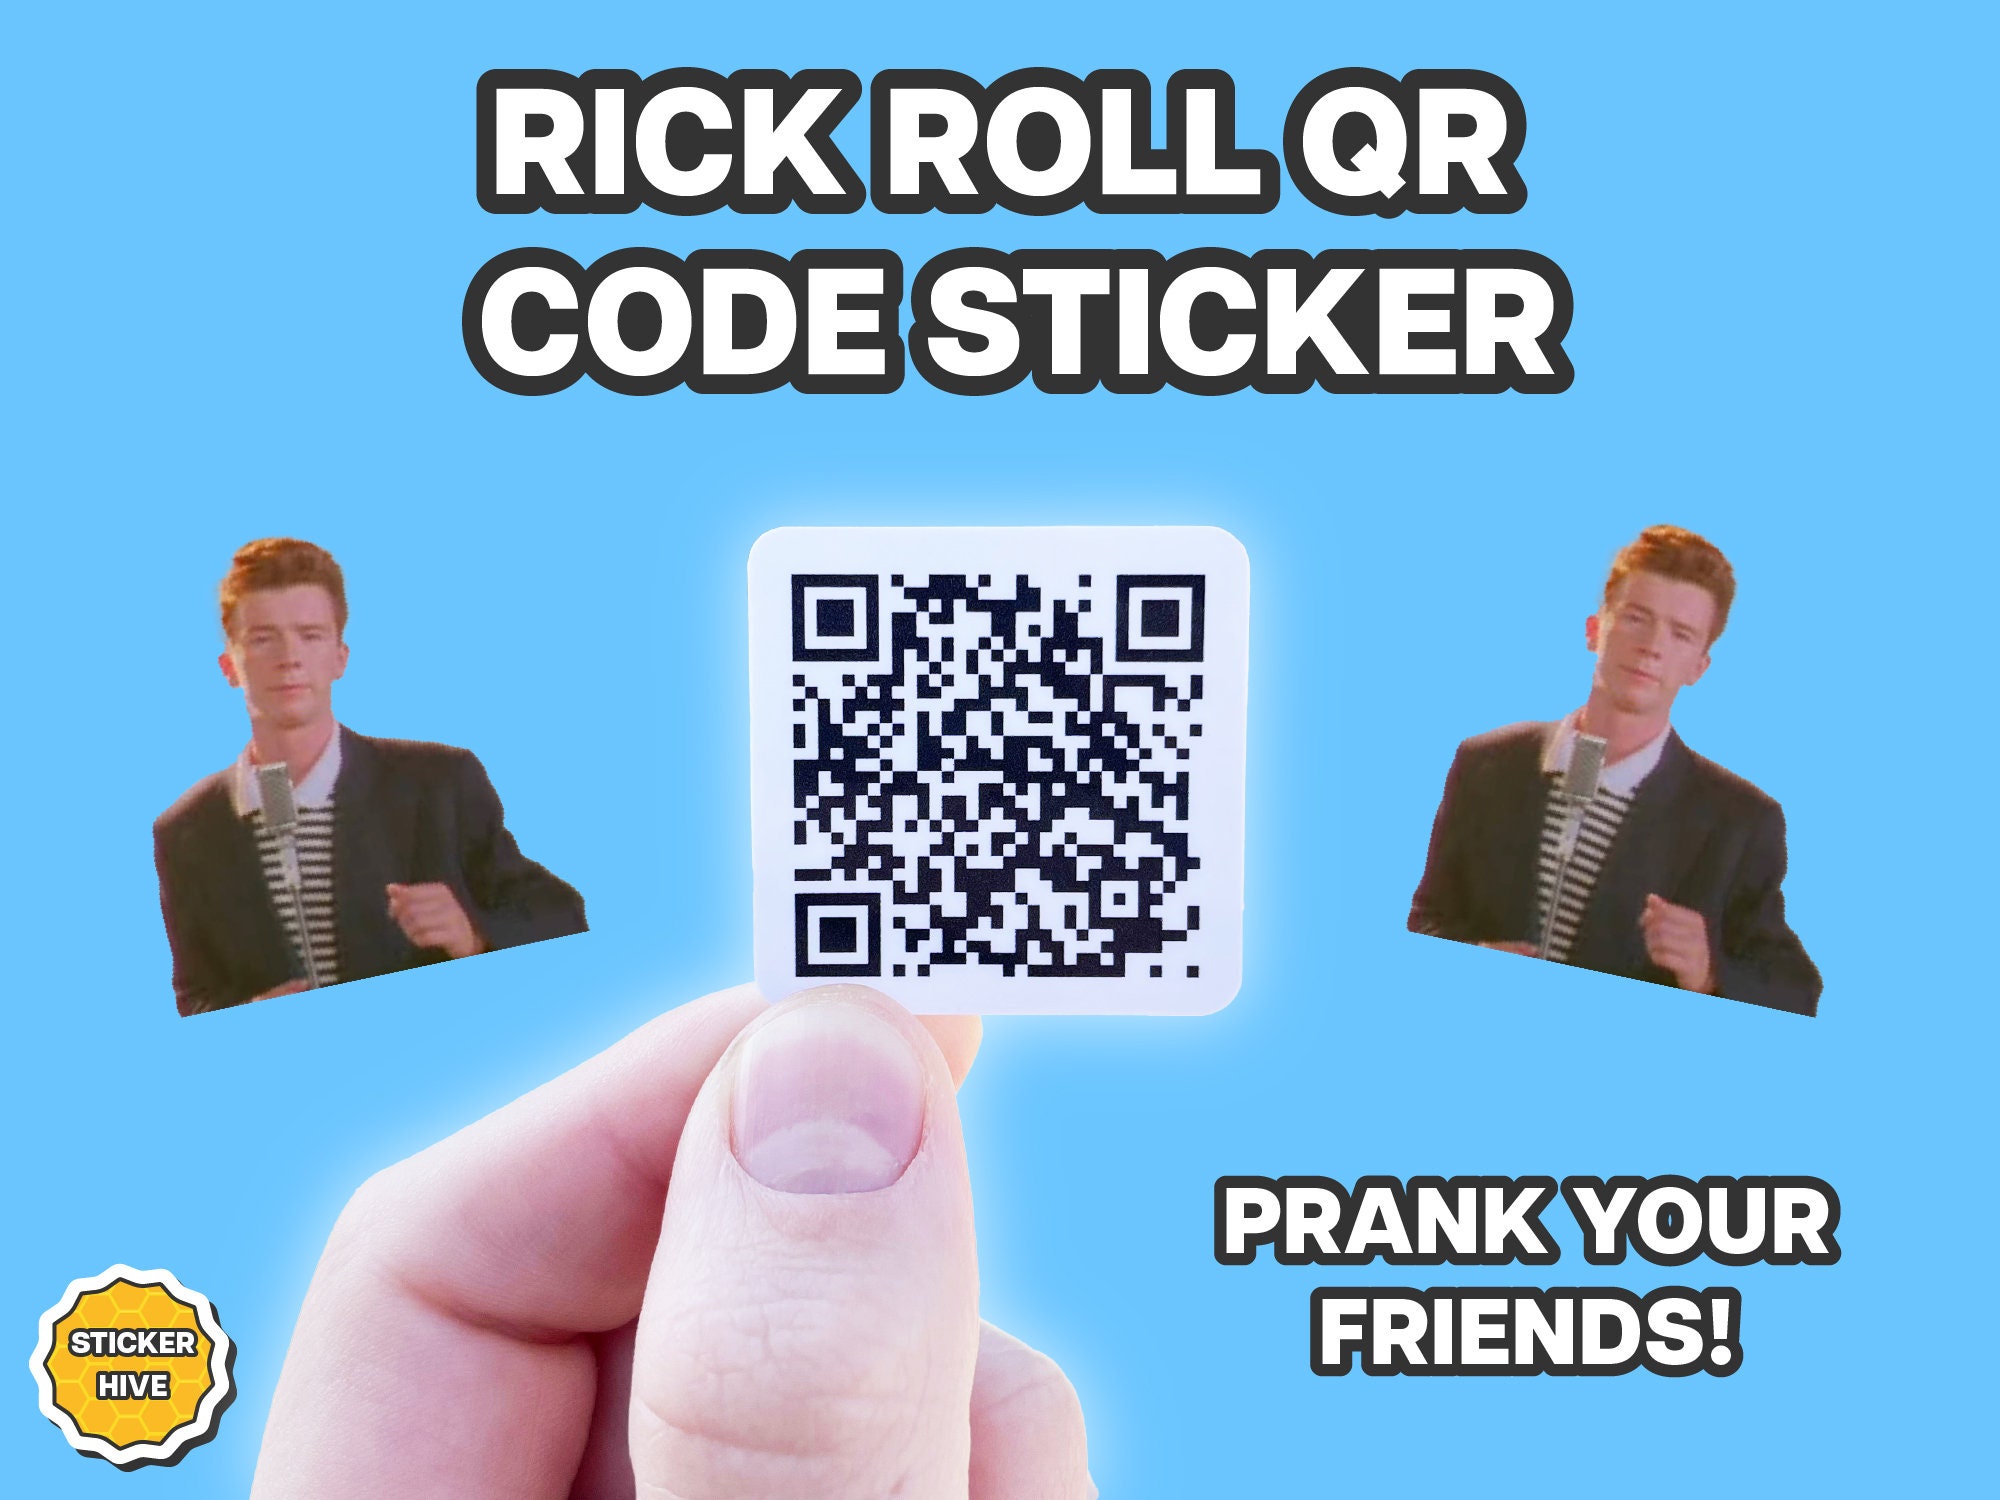 Rick roll, QR code sticker Rick Astley, joke,Rick roll your